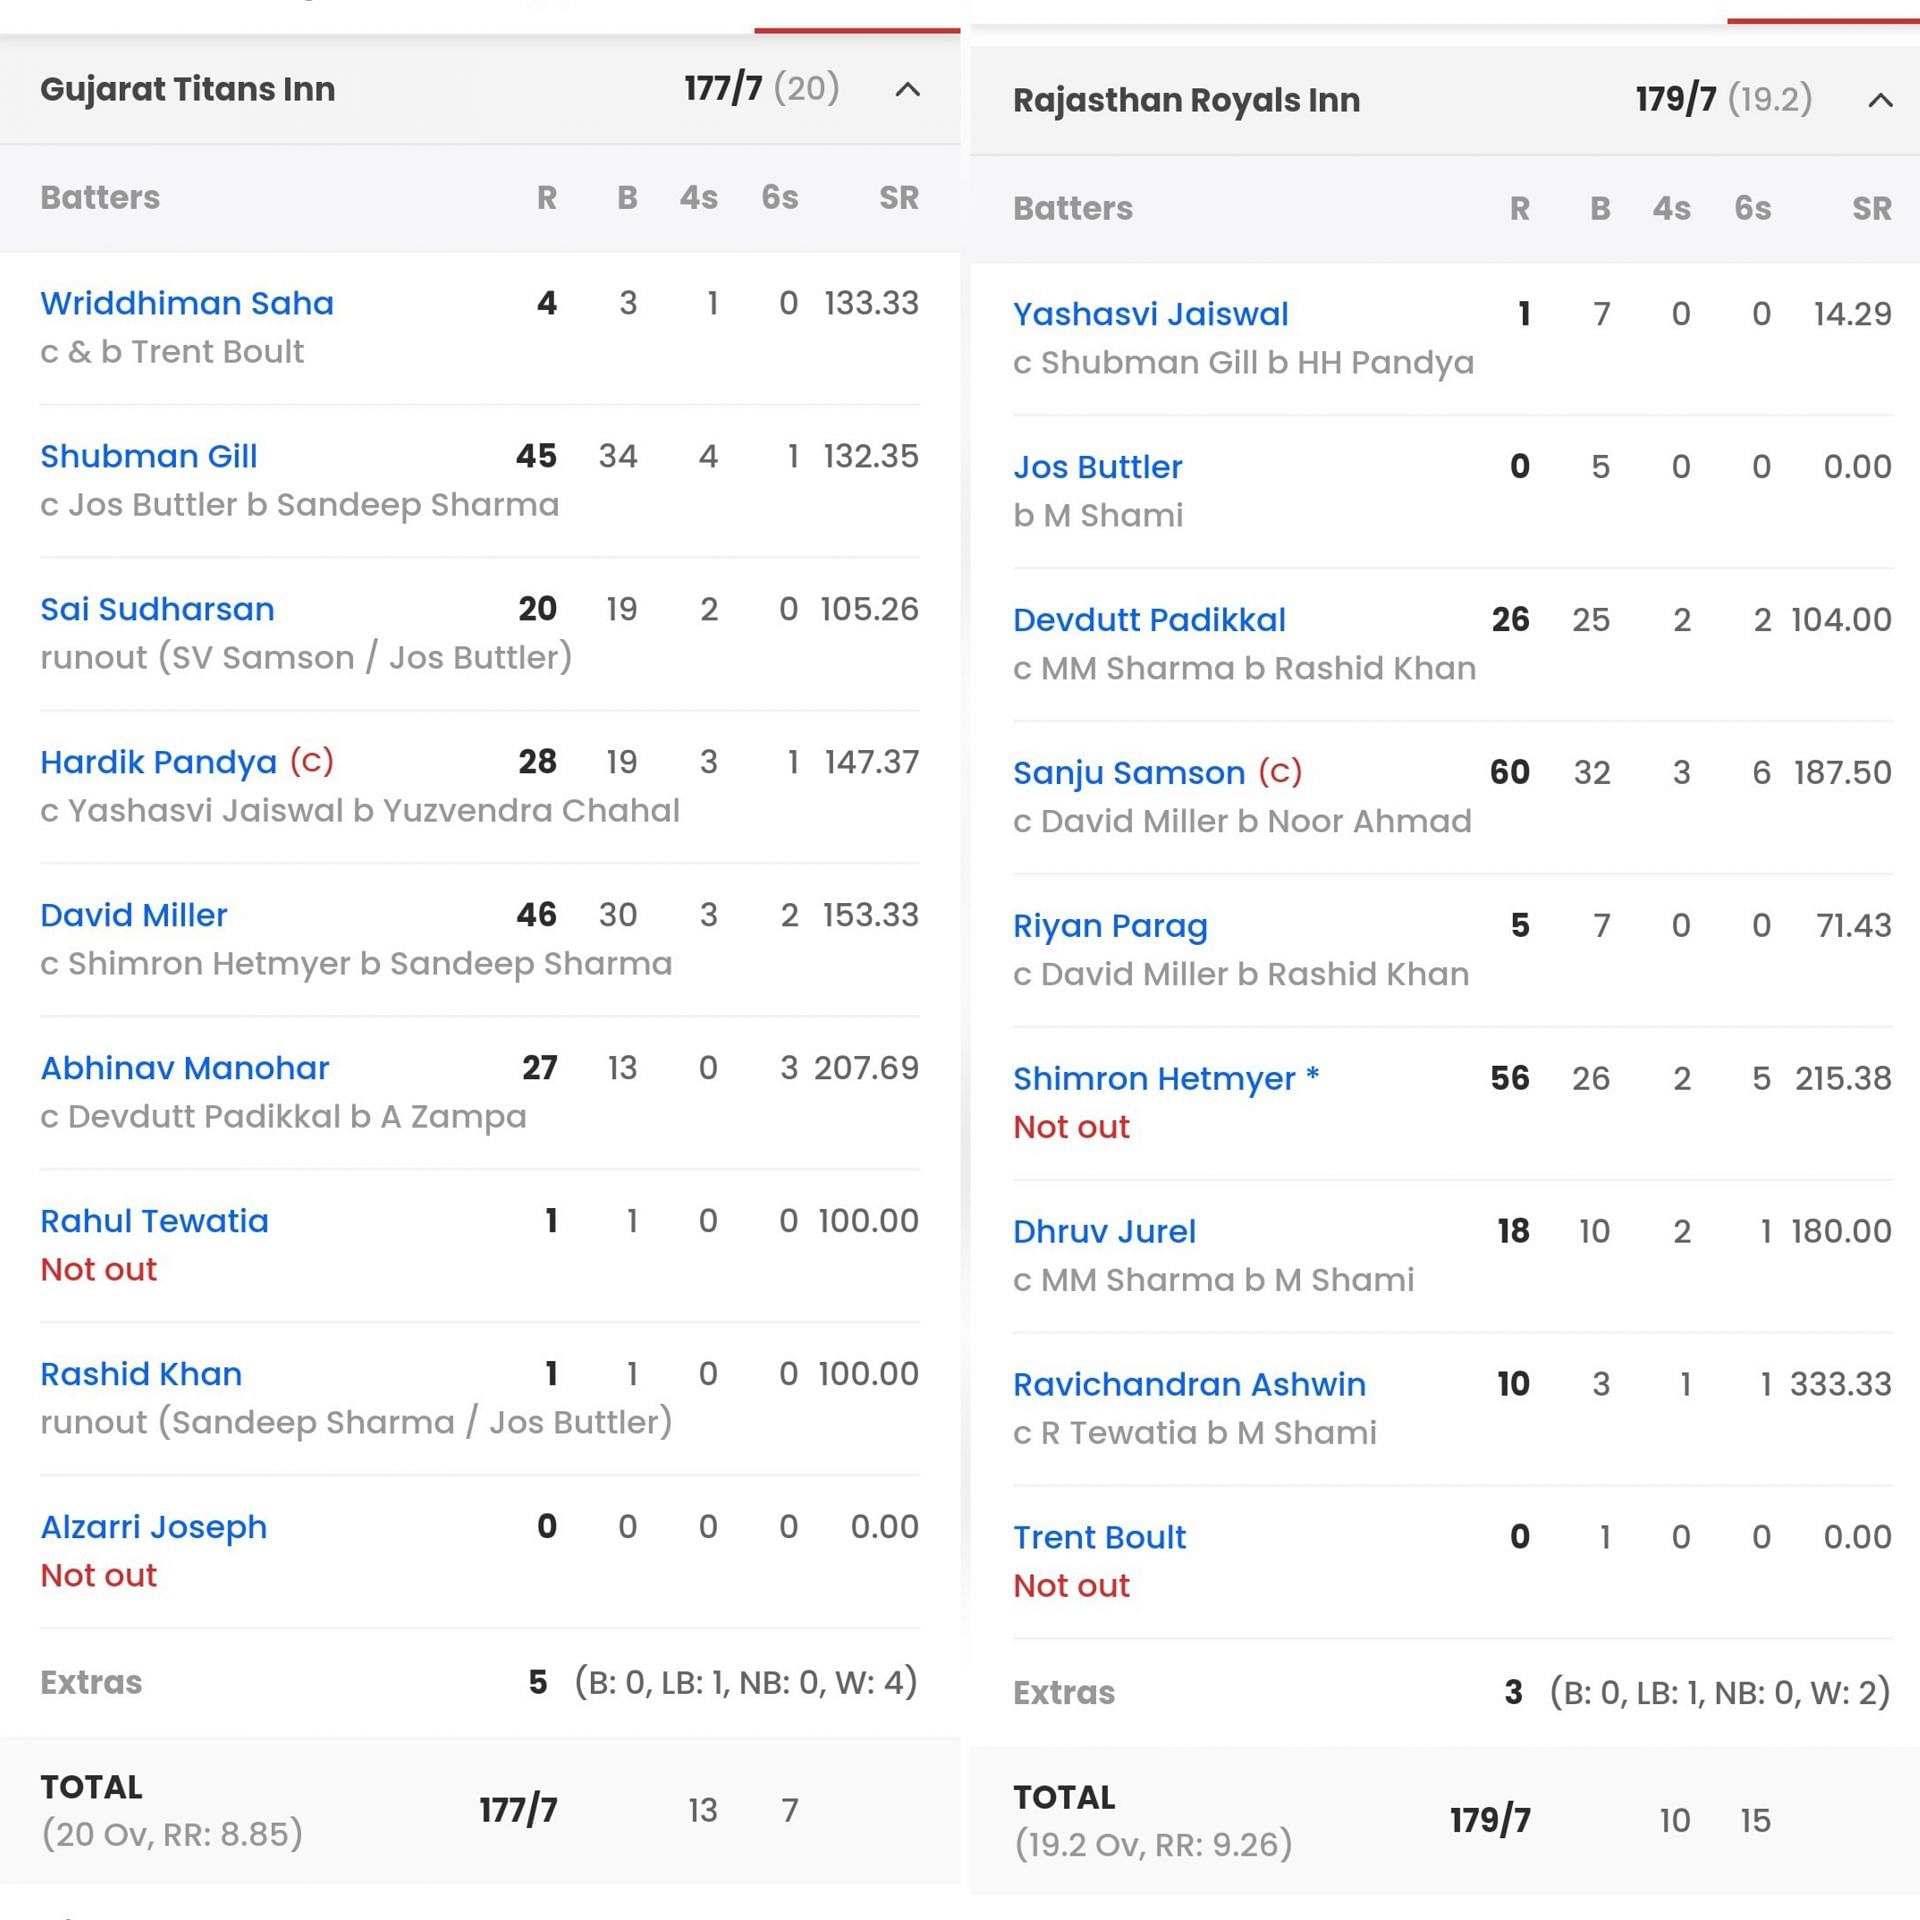 Scorecard of Gujarat Titans vs Rajasthan Royals (Image: Sportskeeda)